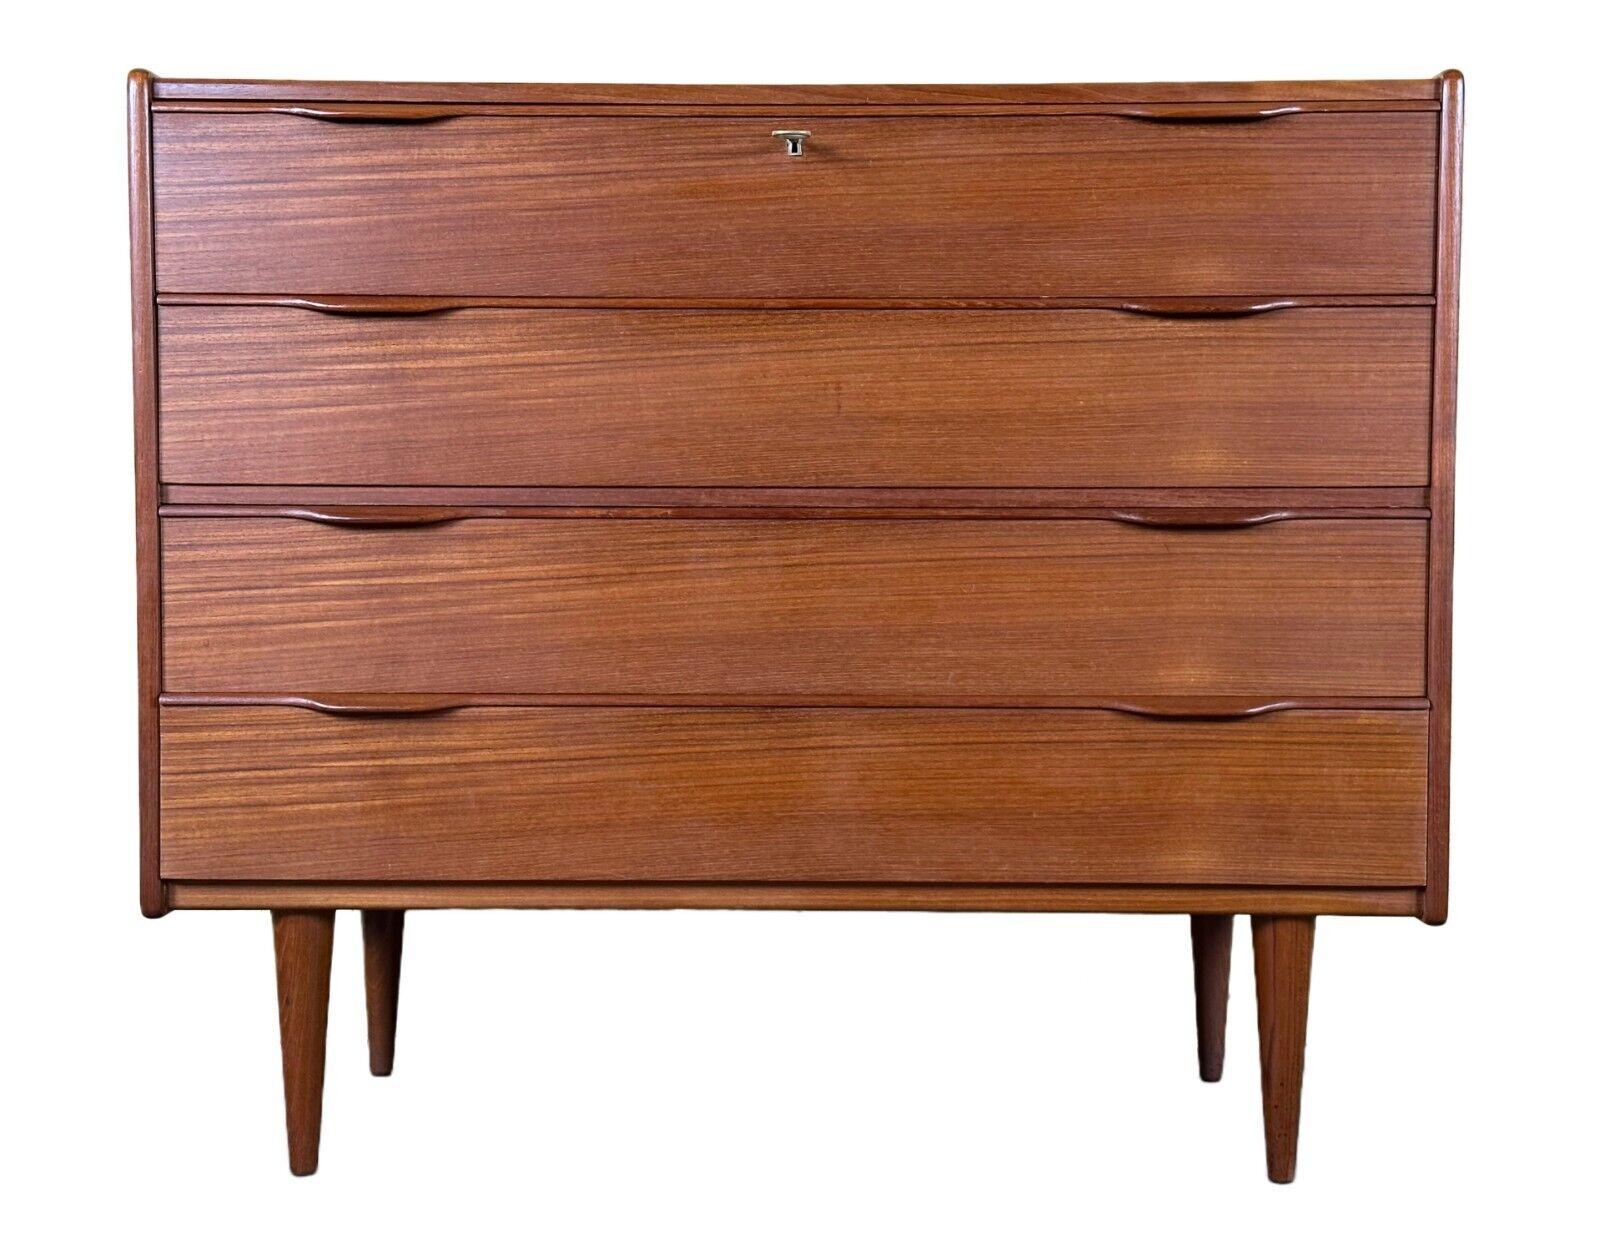 60s 70s teak sideboard chest of drawers cabinet Danish Modern Design Denmark

Object: sideboard

Manufacturer:

Condition: good - vintage

Age: around 1960-1970

Dimensions:

Width = 100cm
Depth = 43cm
Height = 86cm

Material: teak

Other